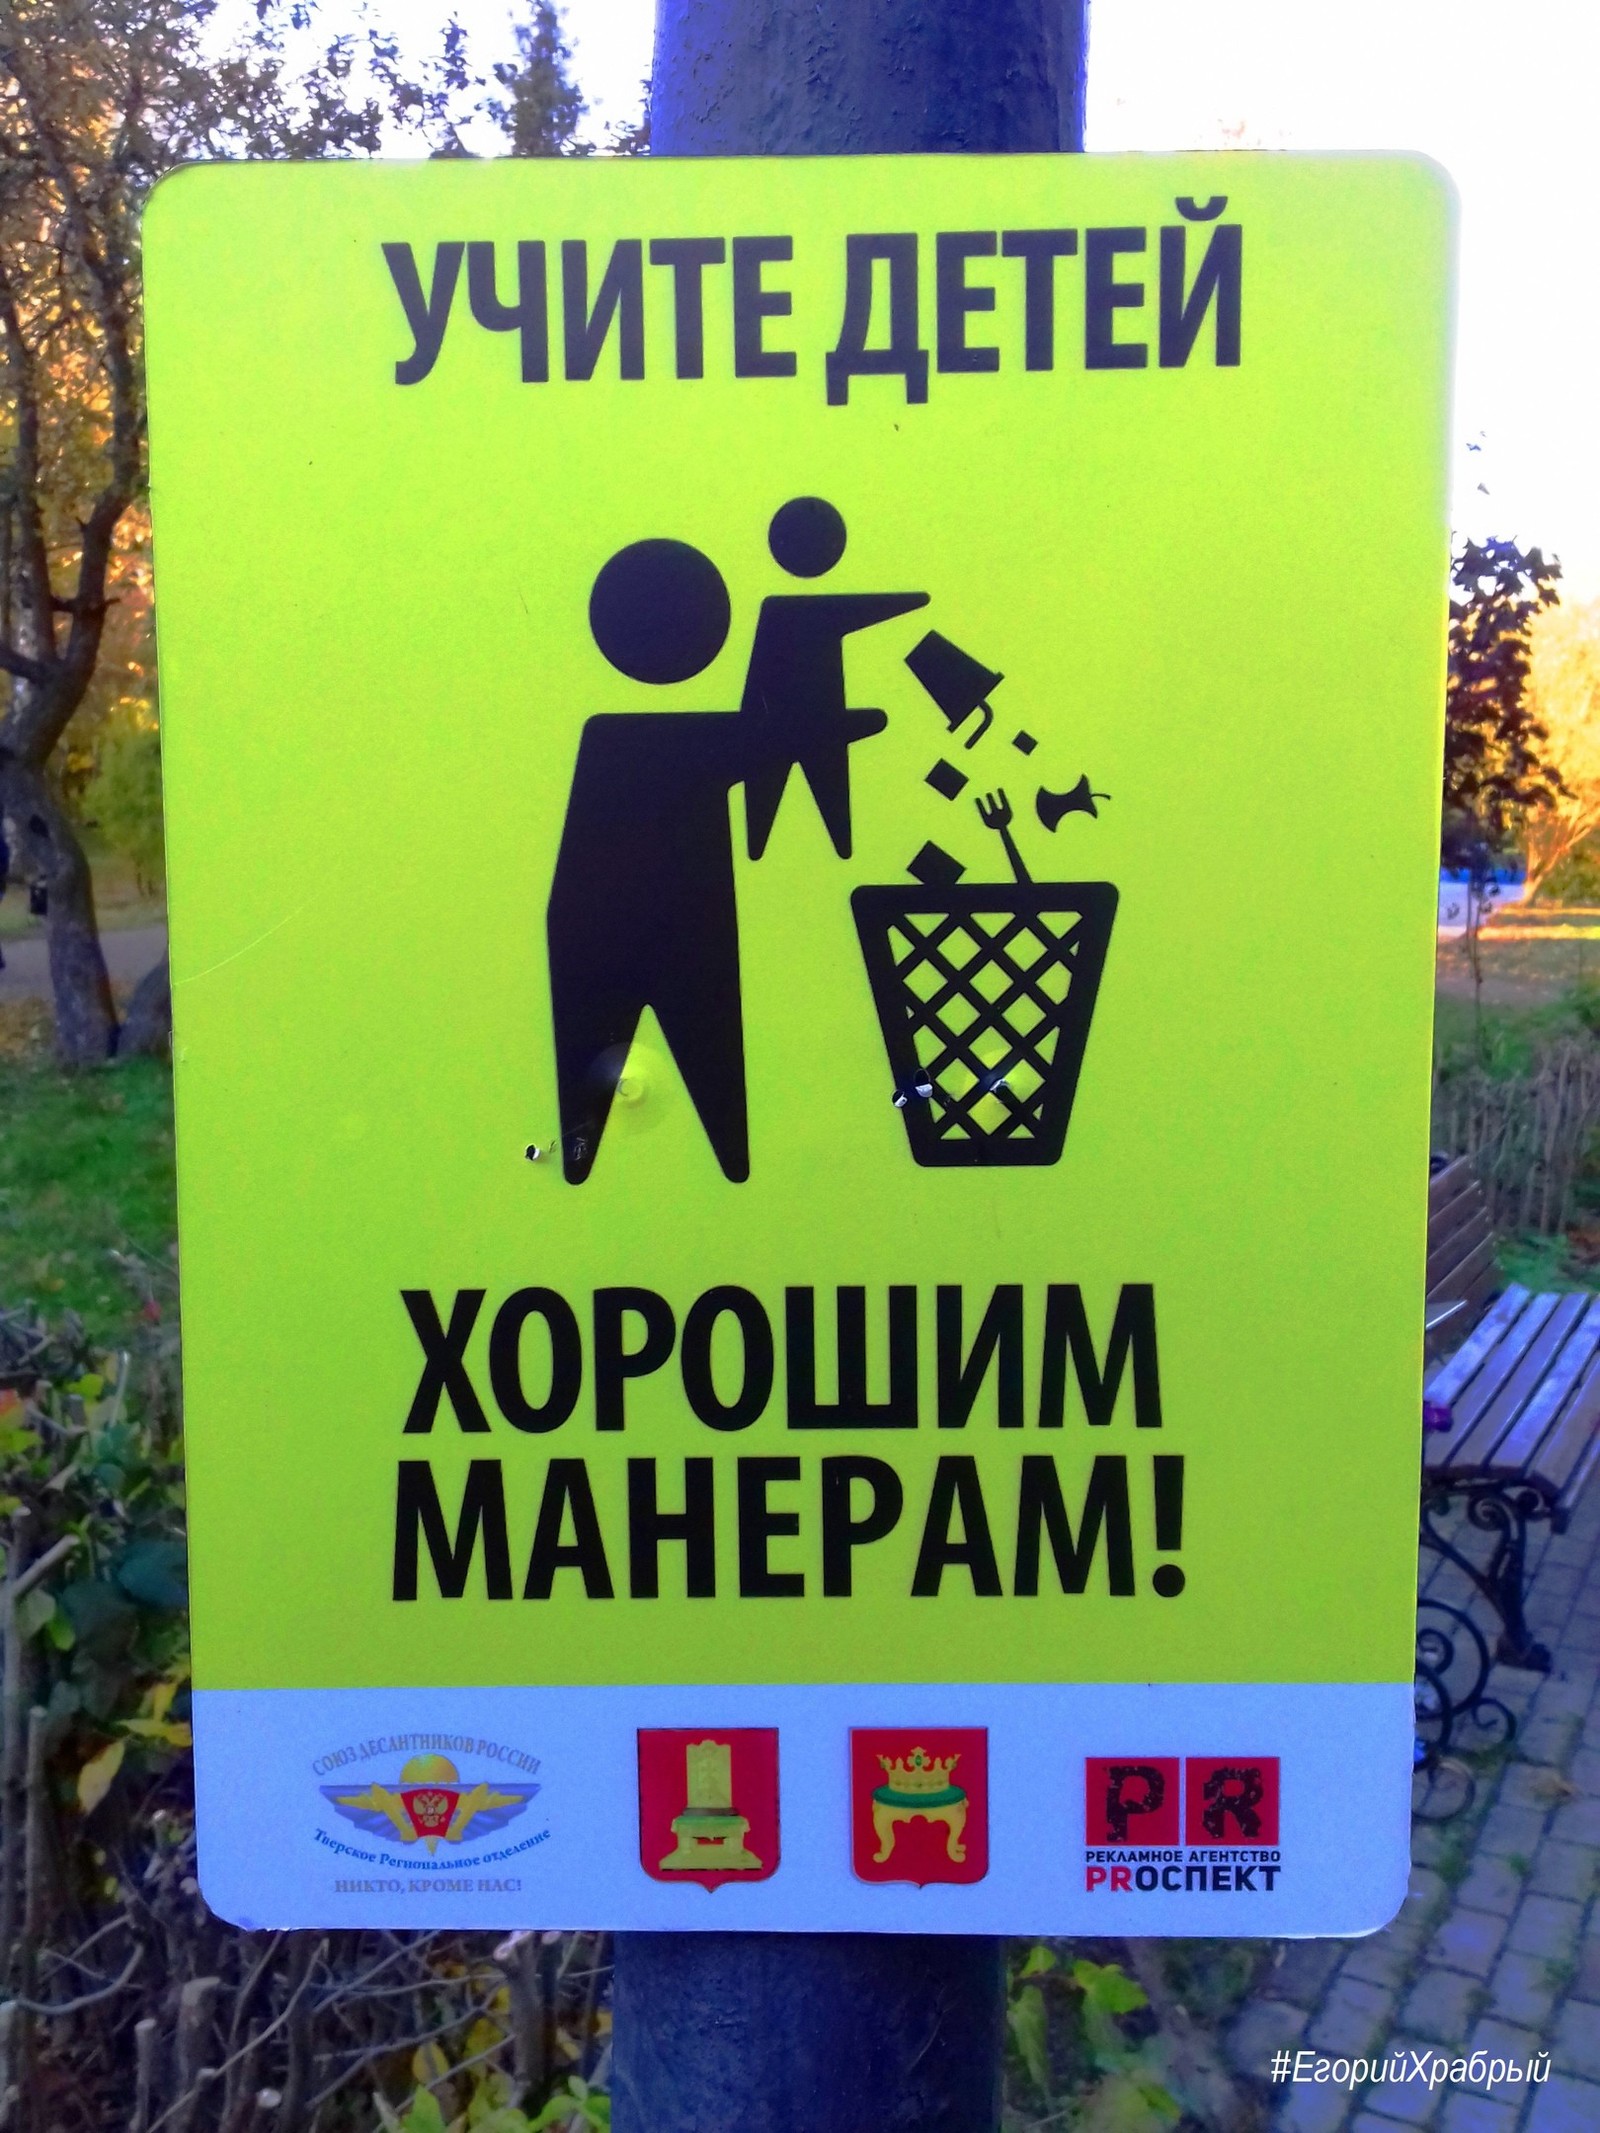 Social advertising - Tver - Social advertisement, Garbage, The park, Tver, Longpost